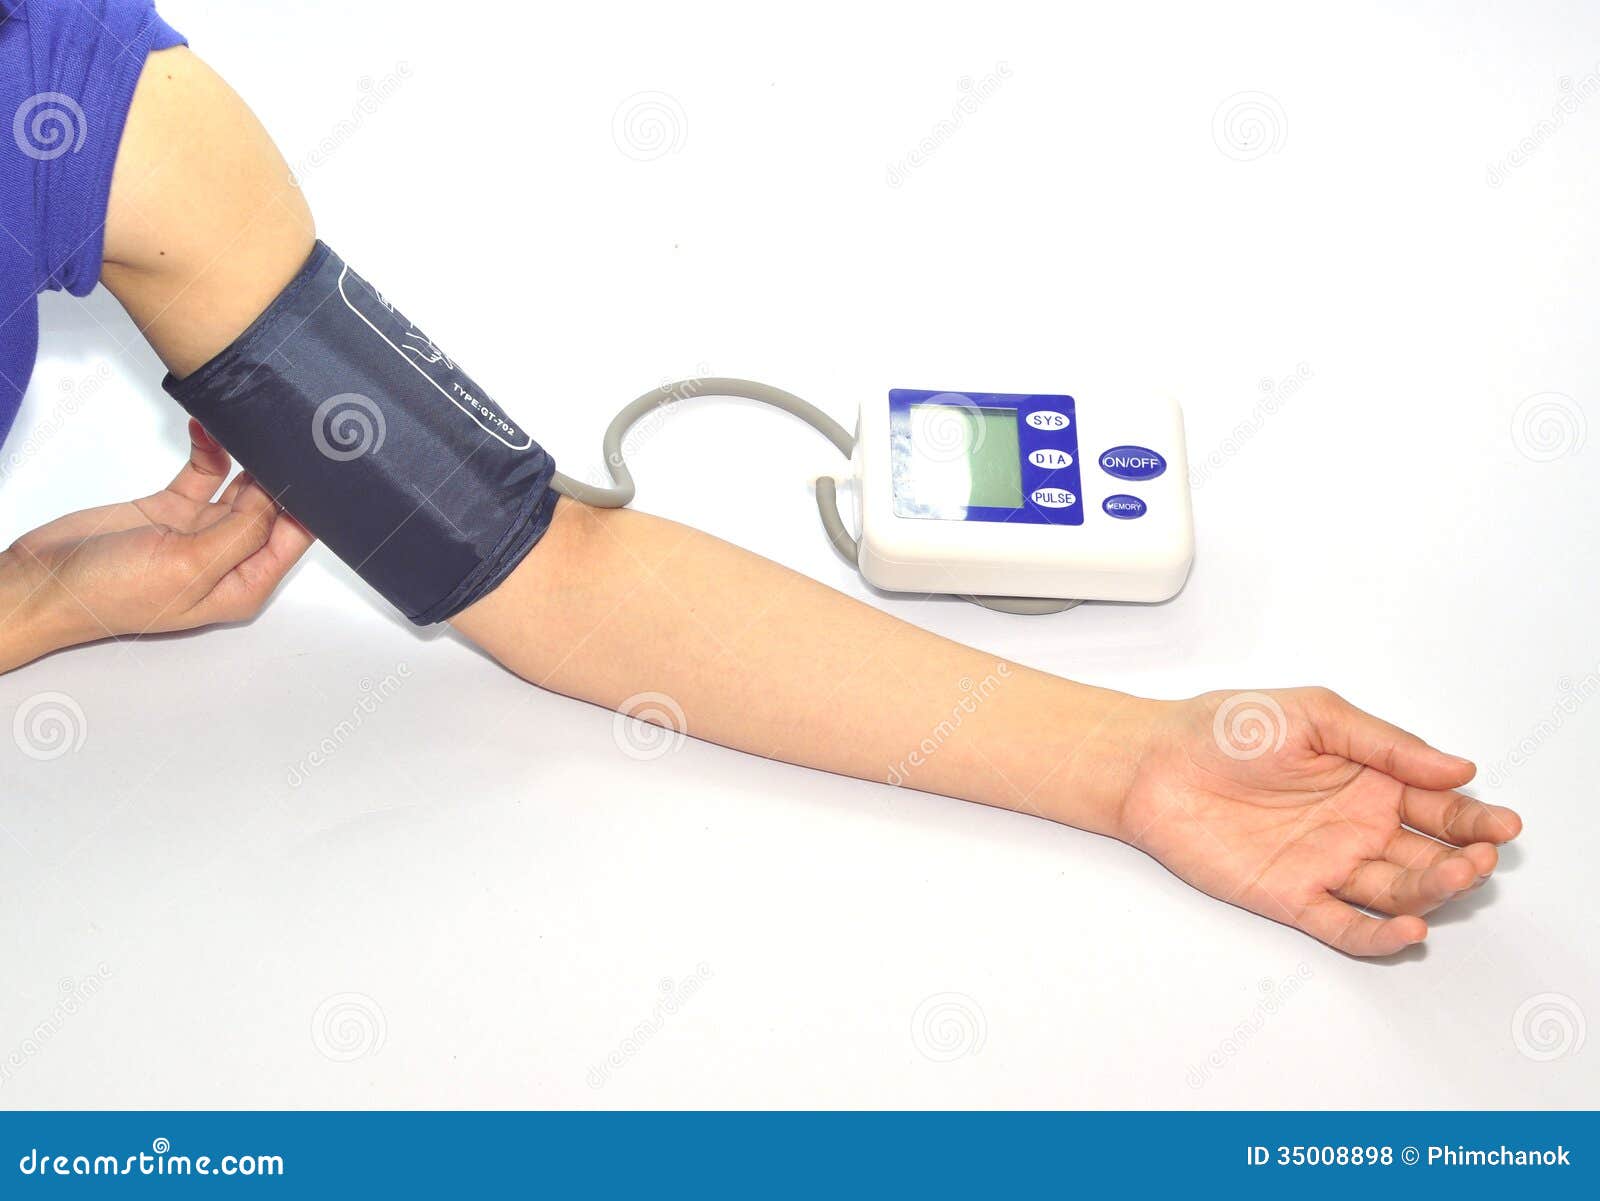 clipart blood pressure machine - photo #38